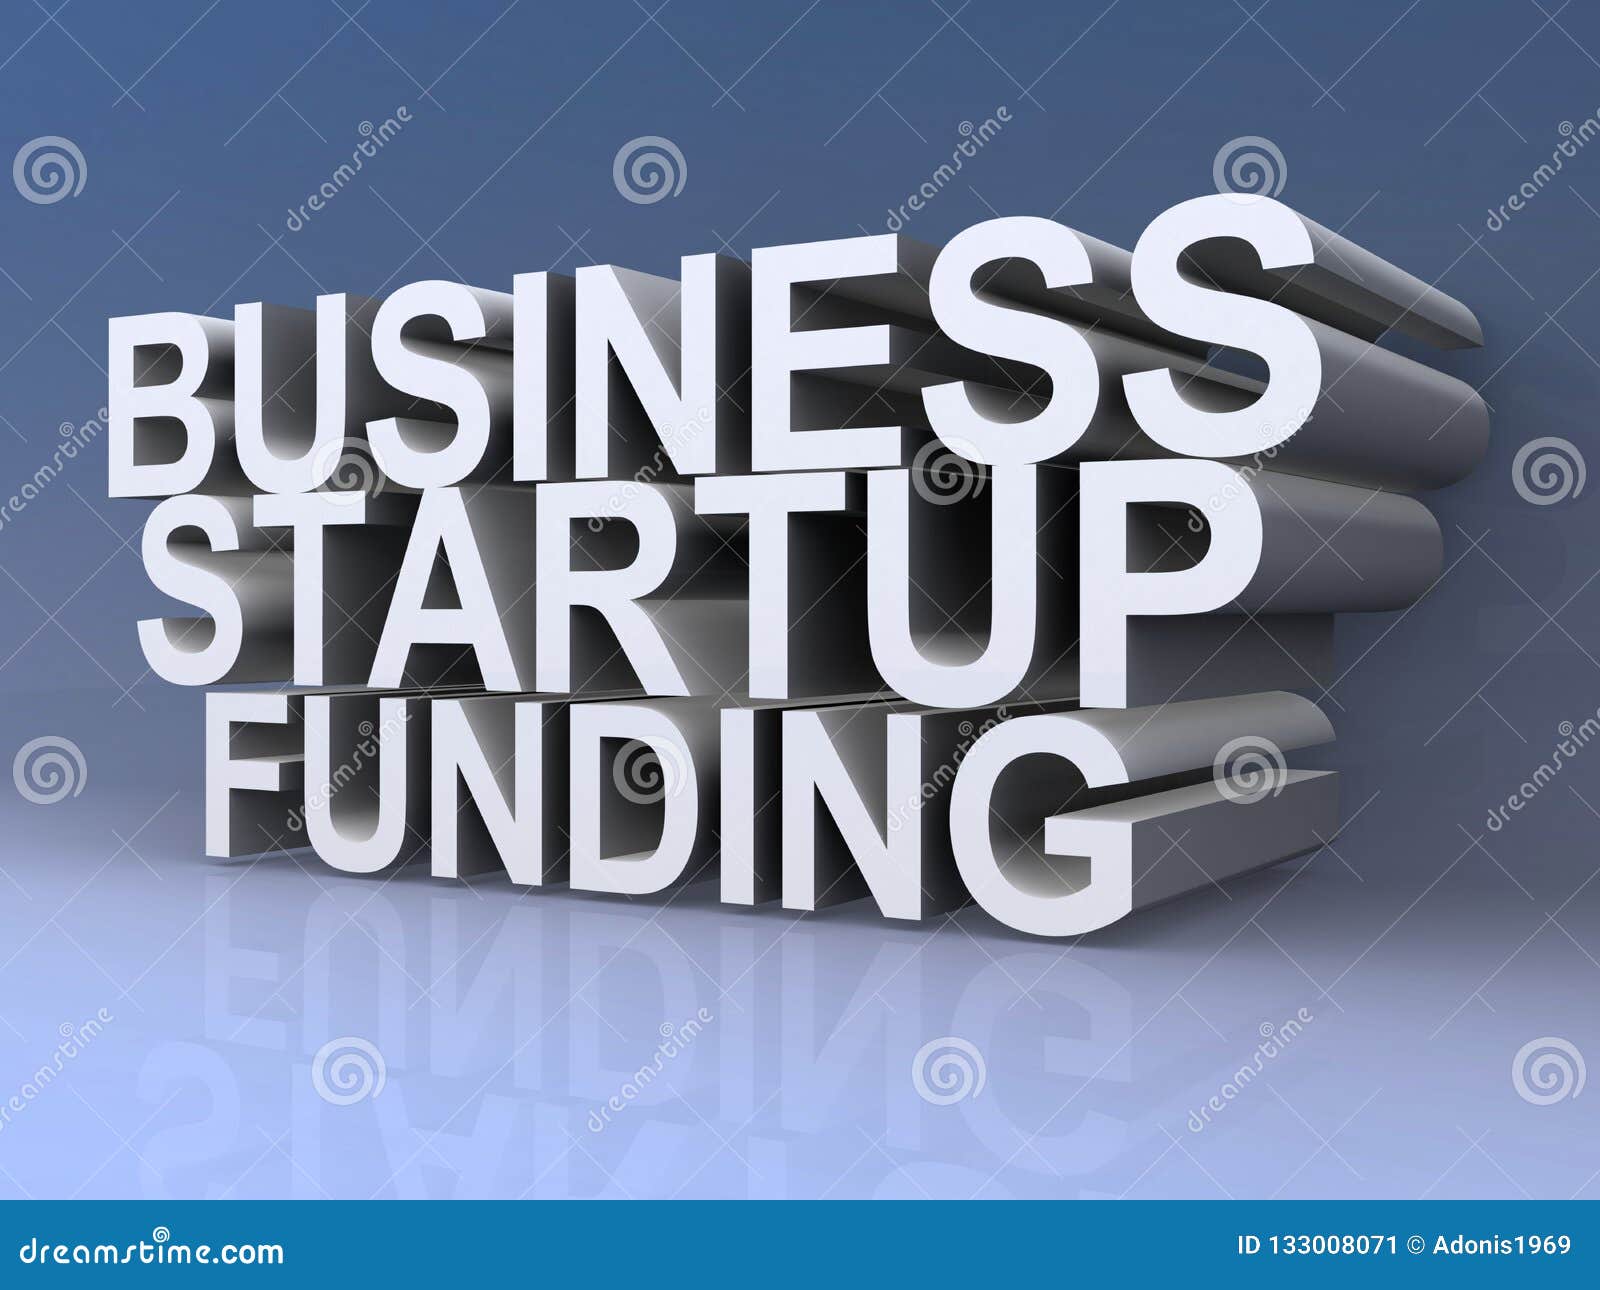 Business, startup, funding stock illustration. Illustration of text ...